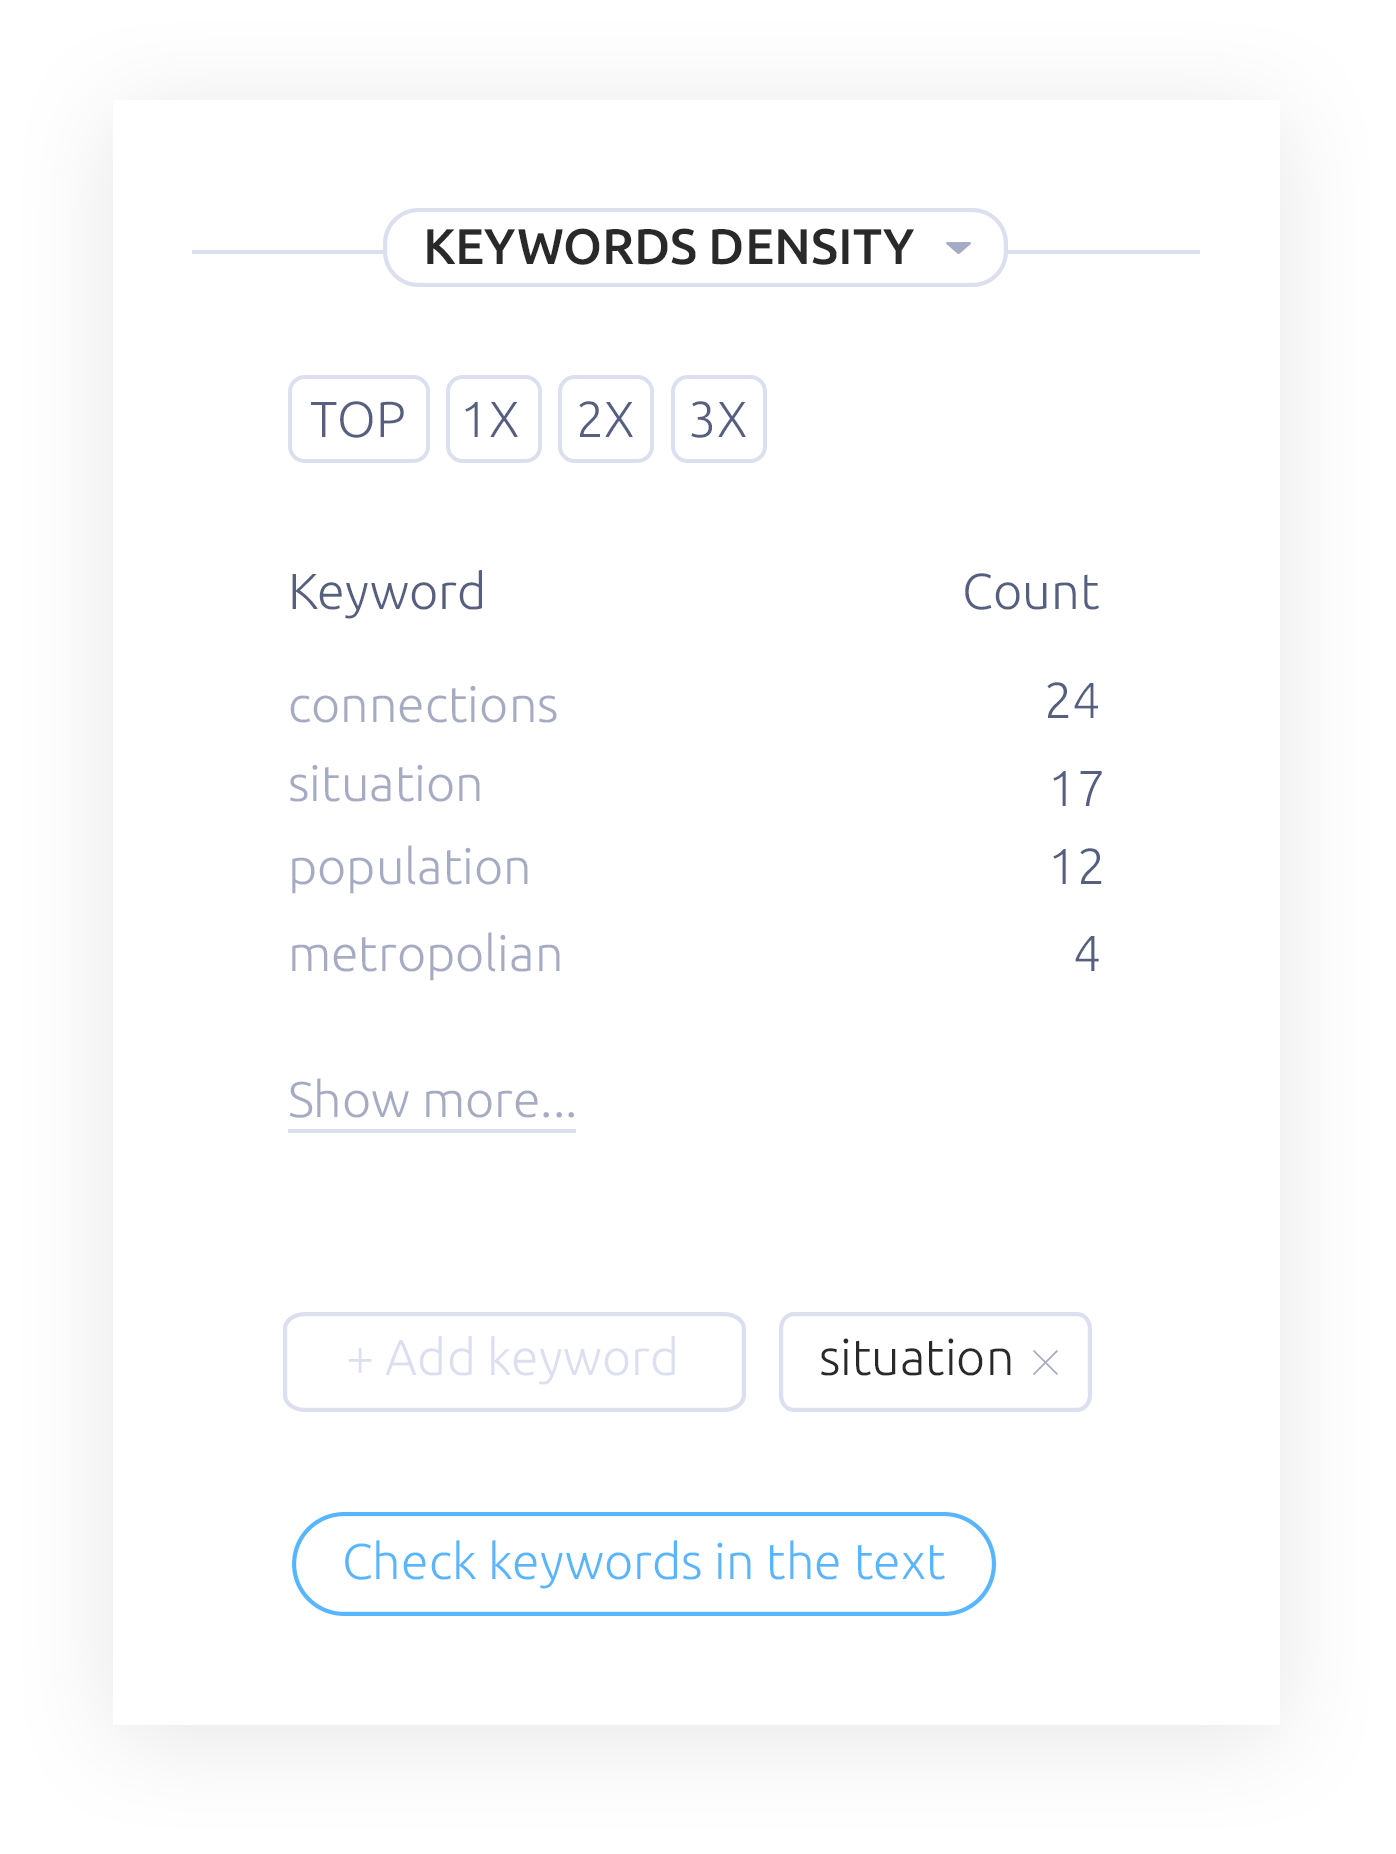 Blog Article Keywords Density Check